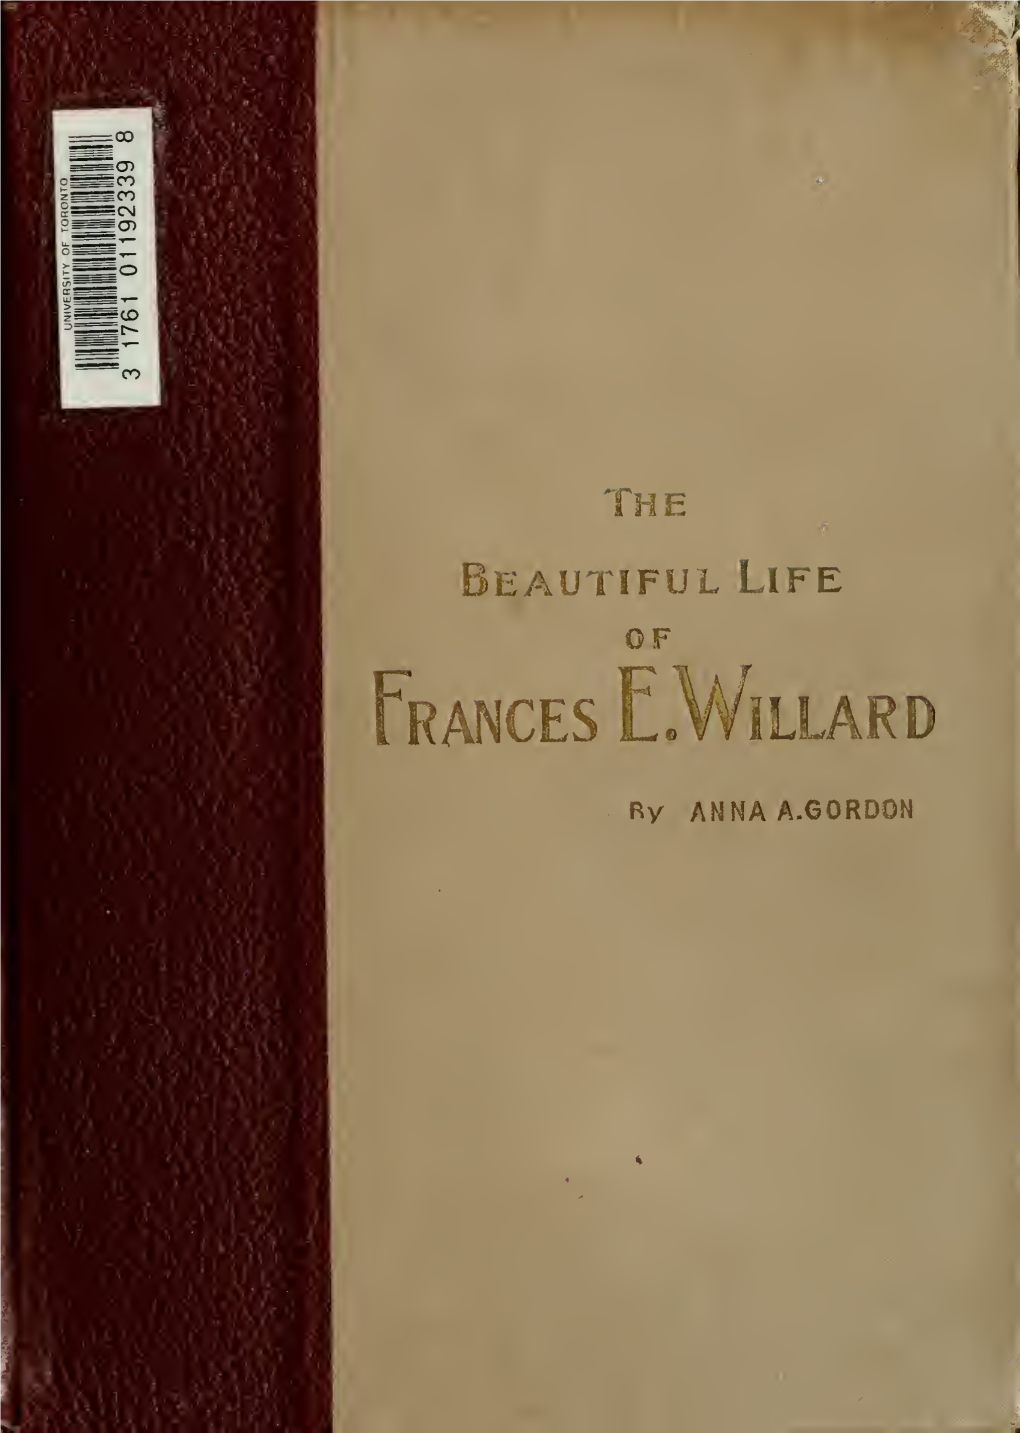 The Beautiful Life of Frances E. Willard : a Memorial Volume